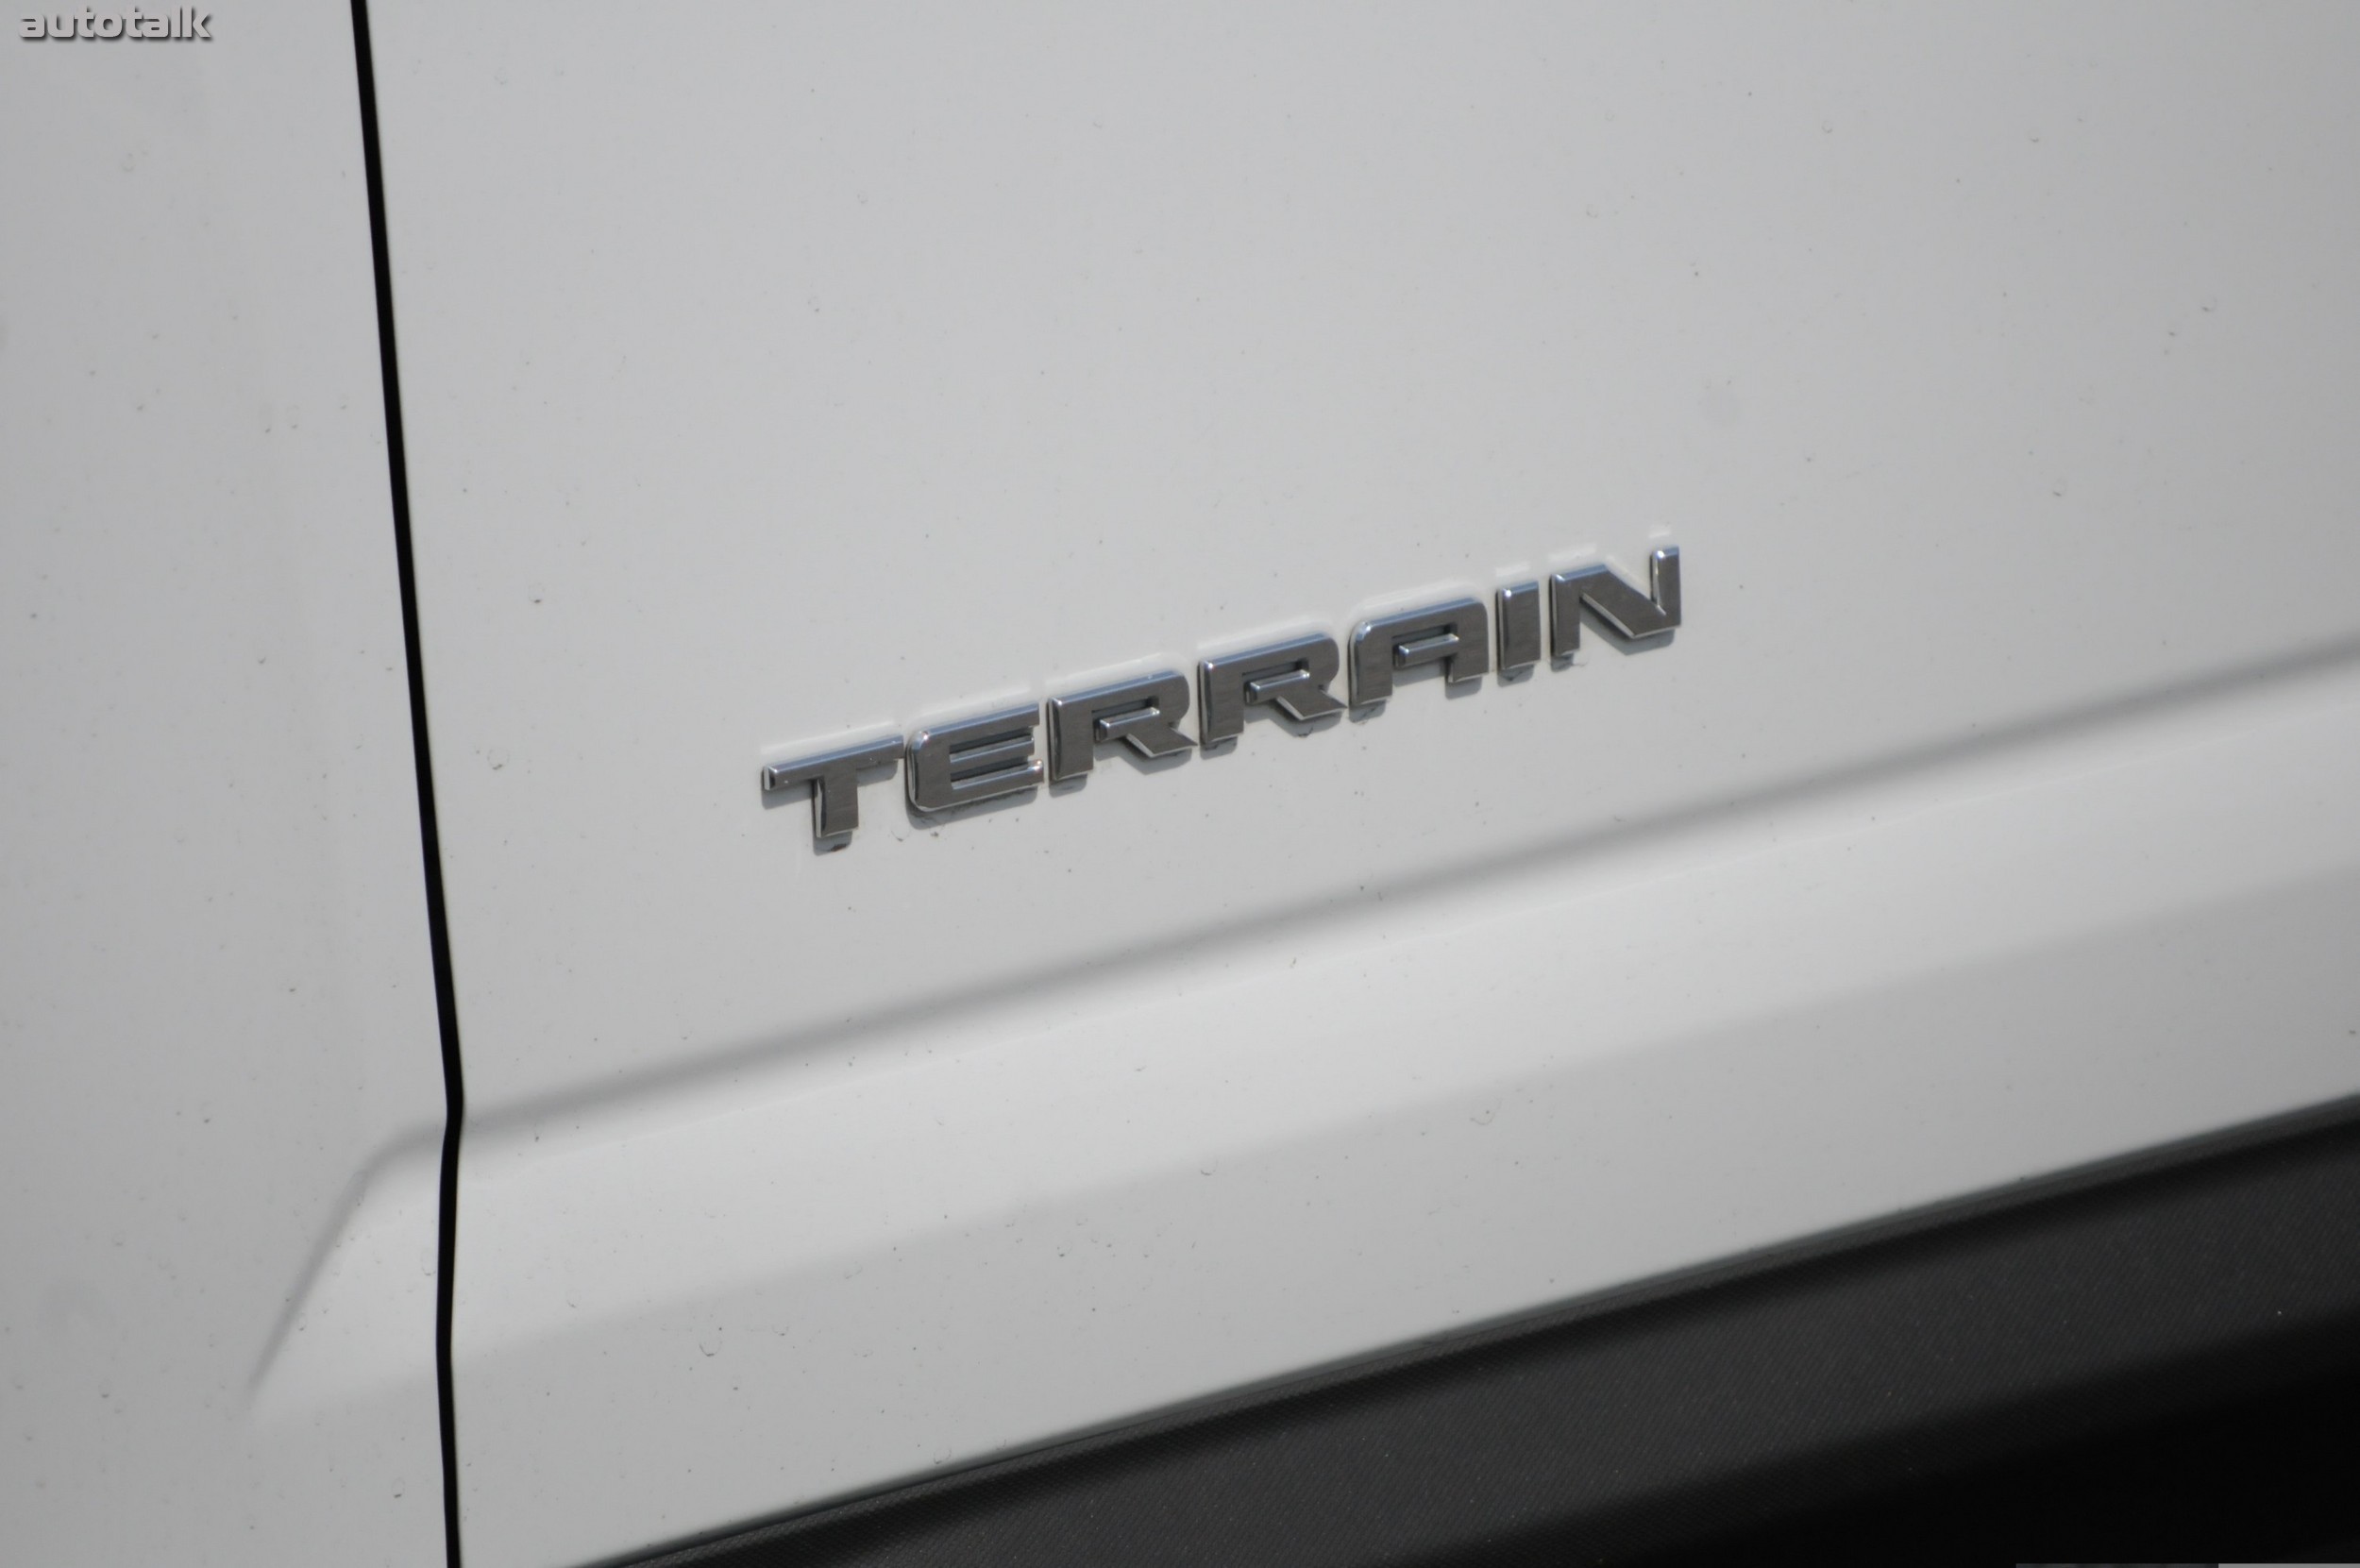 2011 GMC Terrain Review